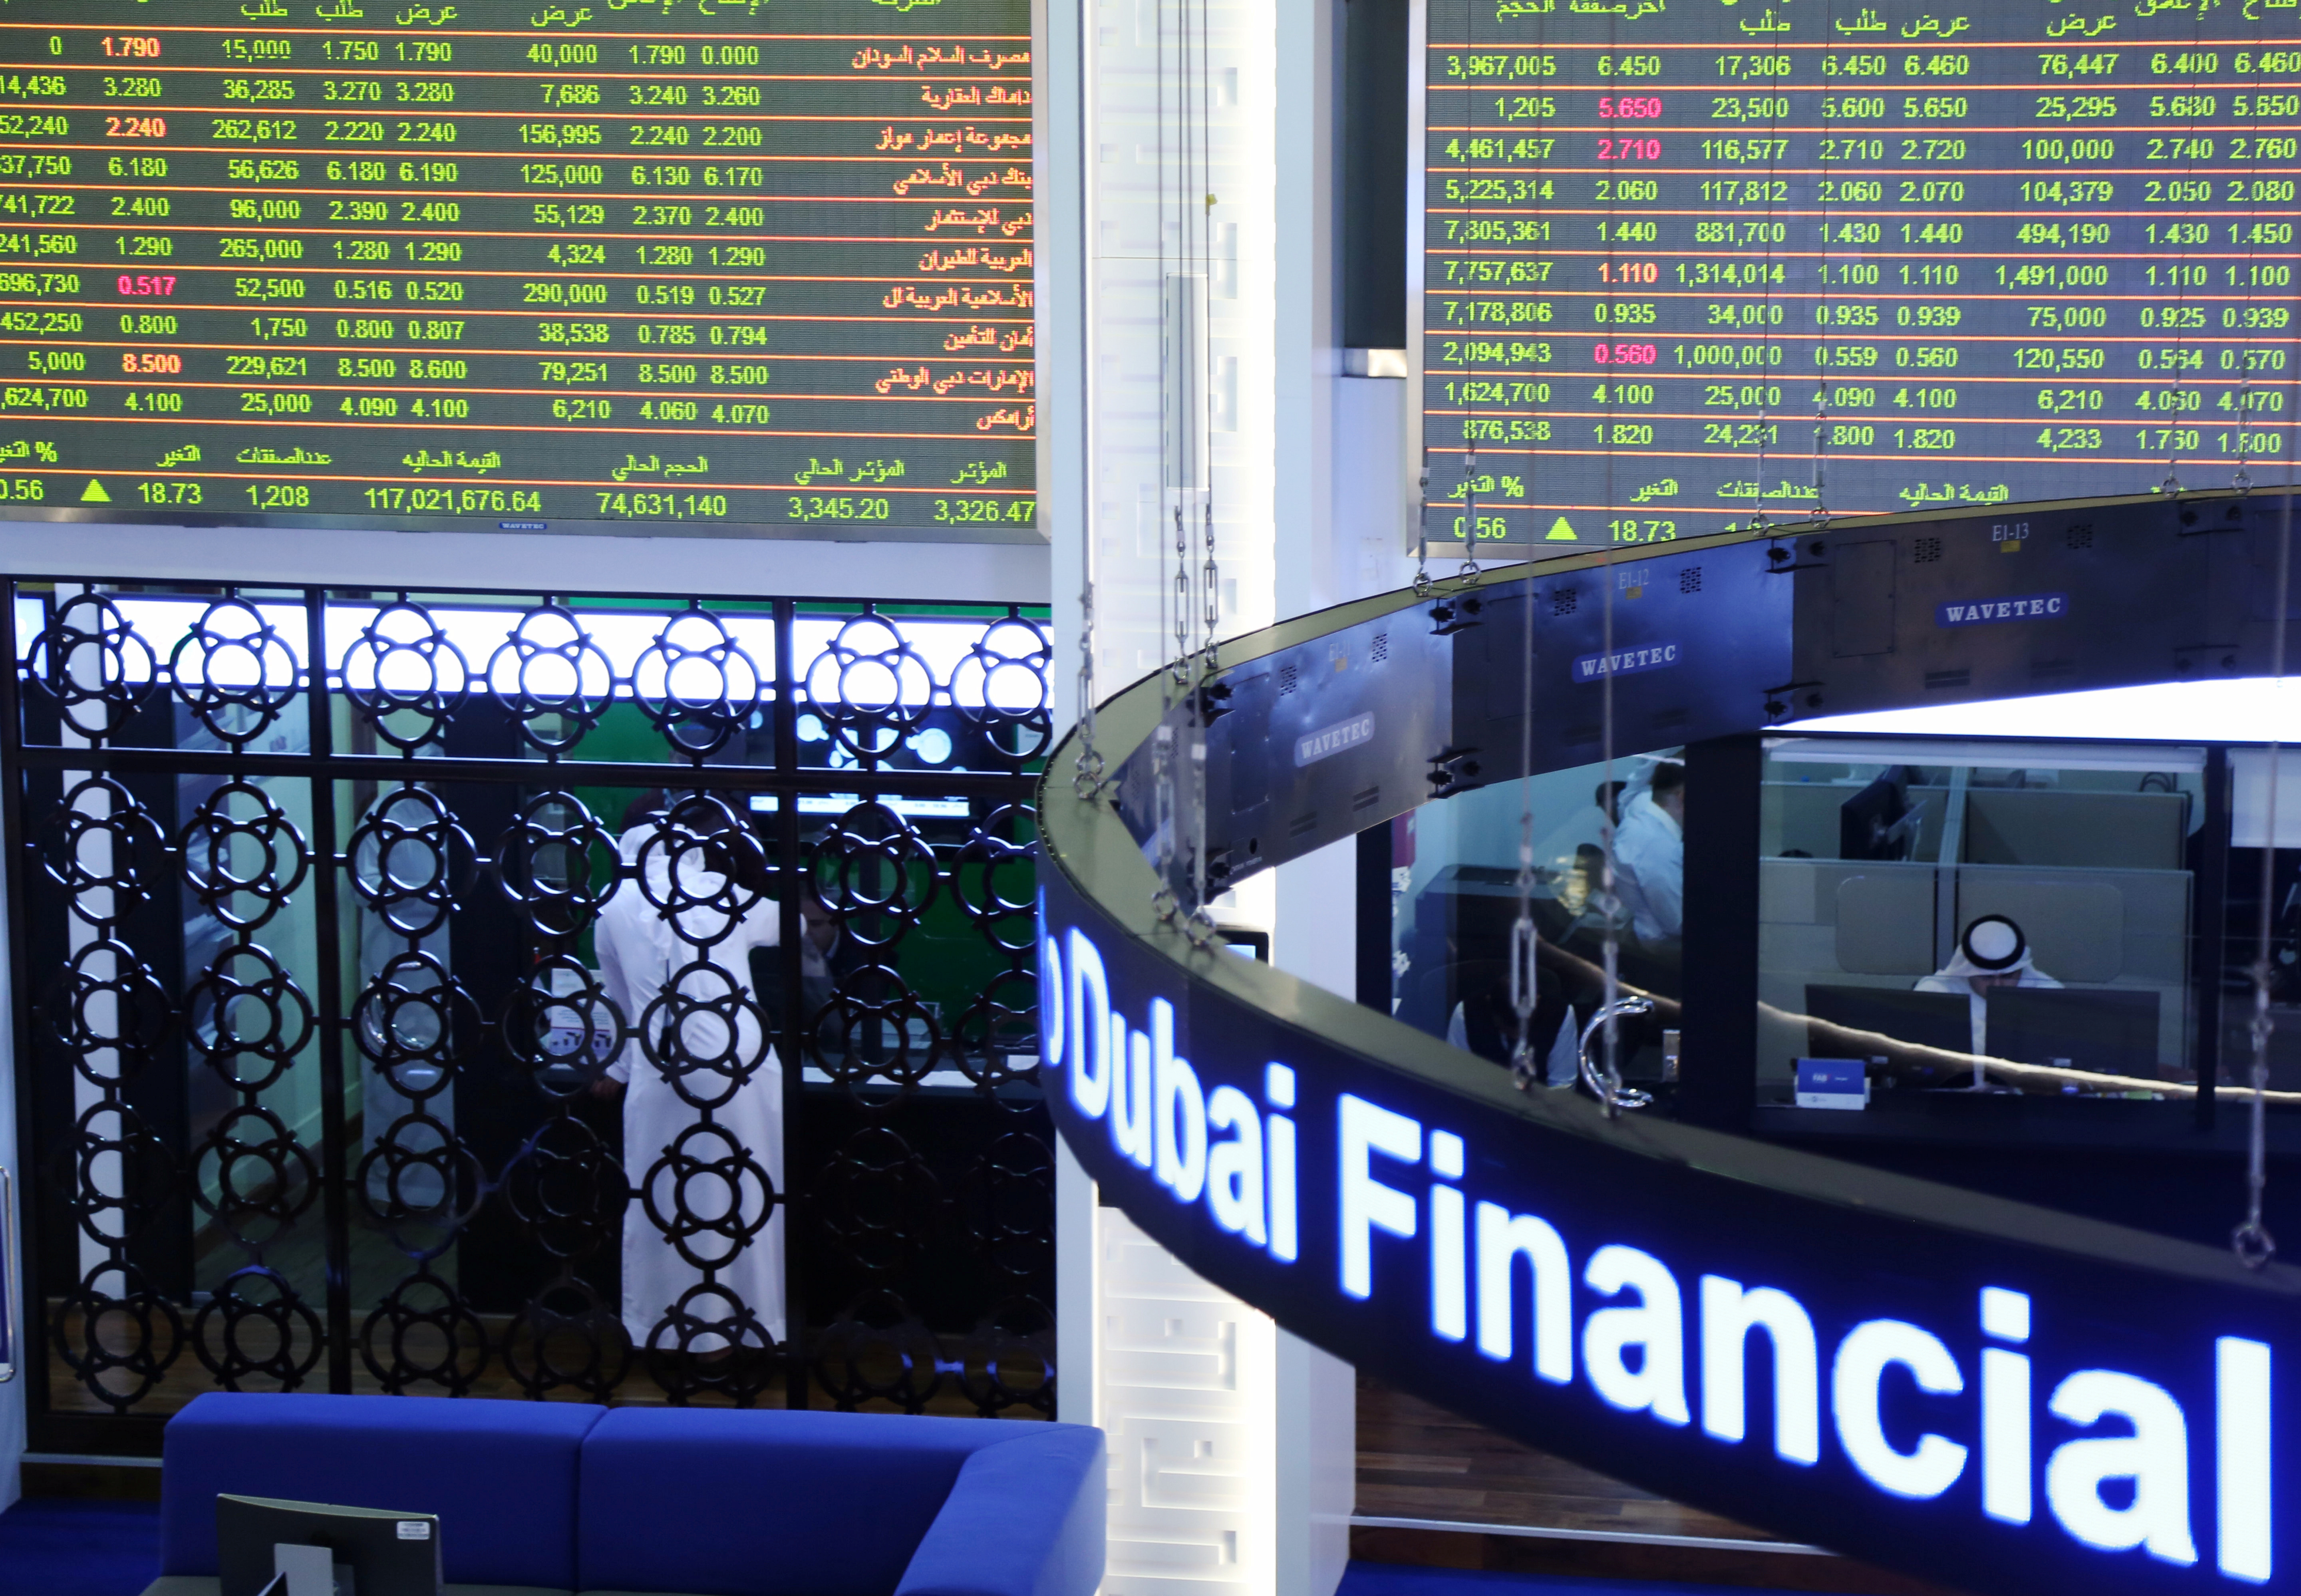 The Dubai International Financial Market in Dubai.